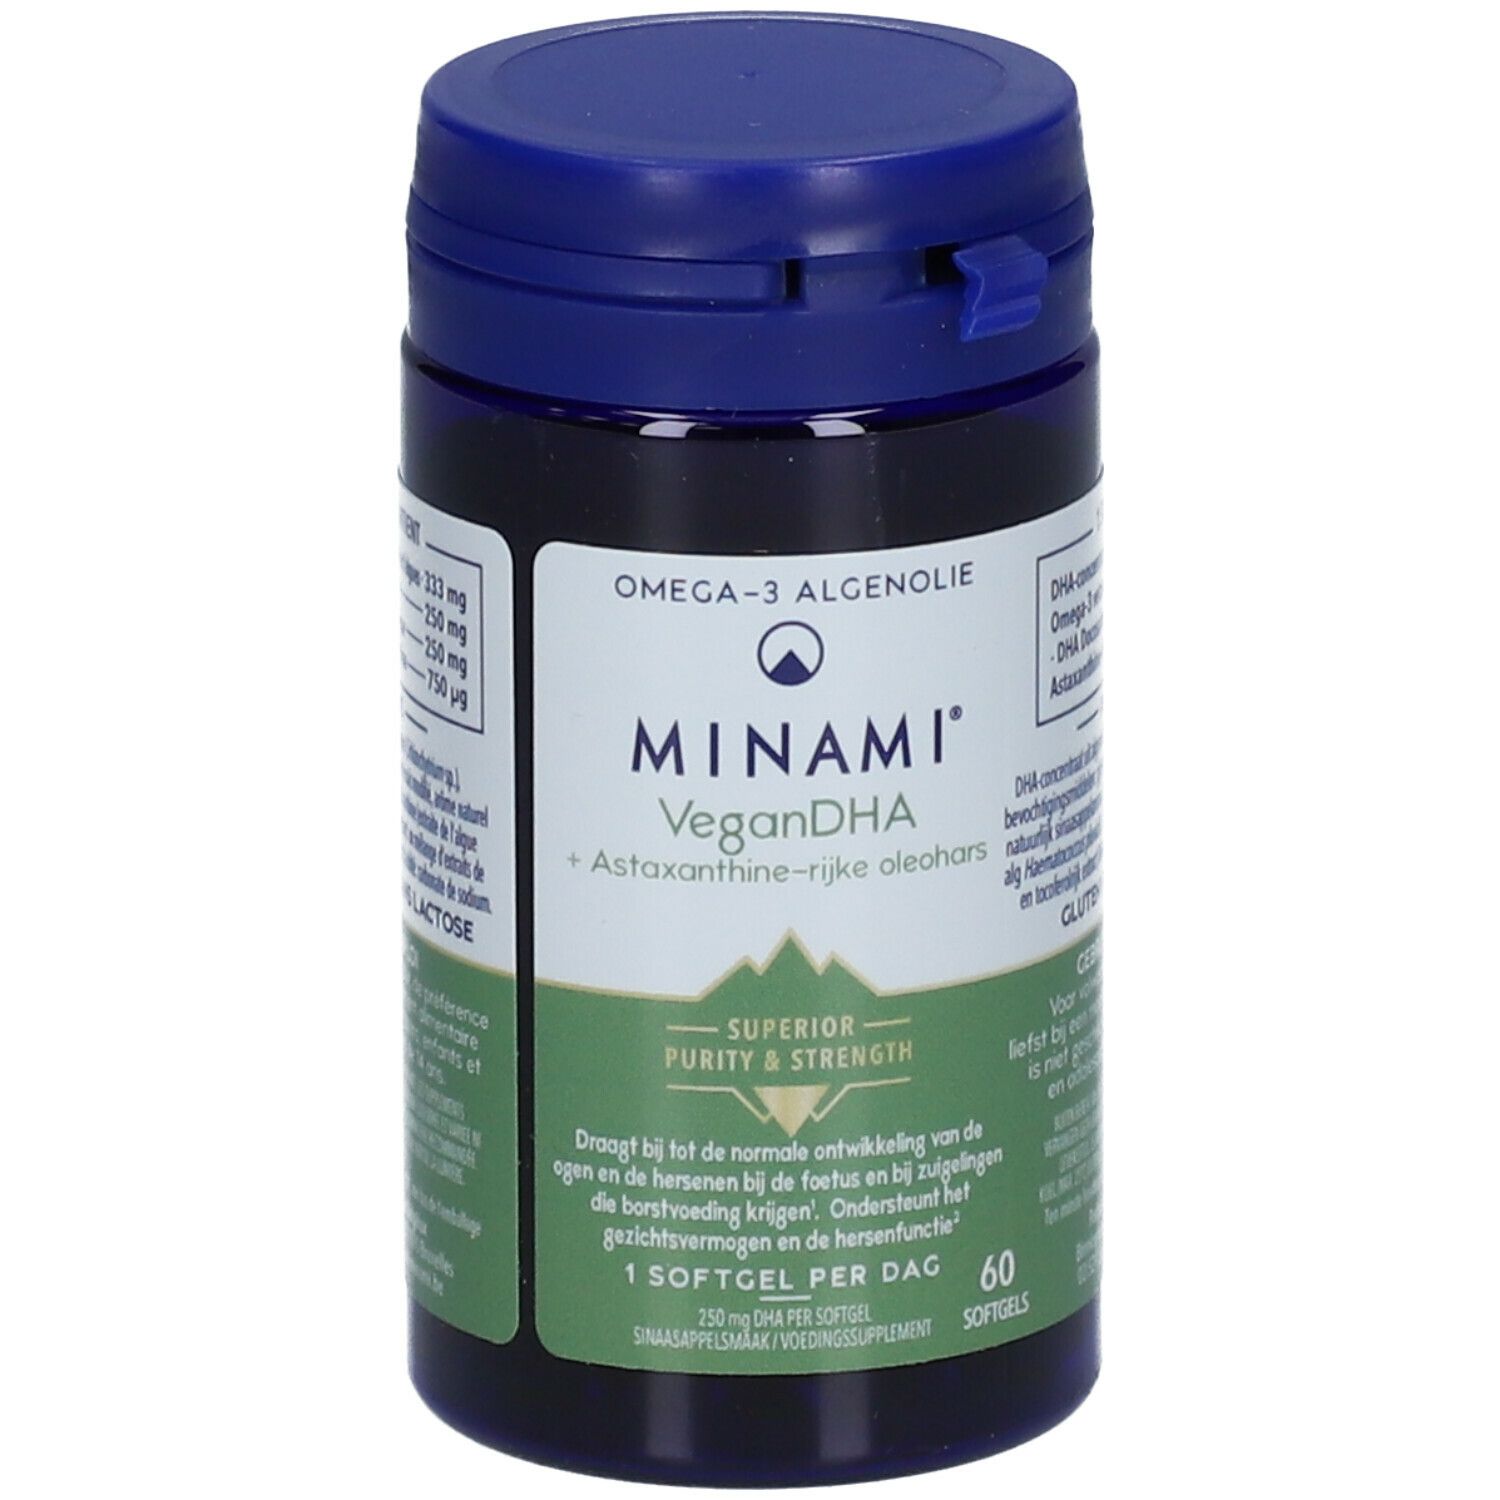 Minami® VeganDHA + Oléorésine Riche en Astaxanthine